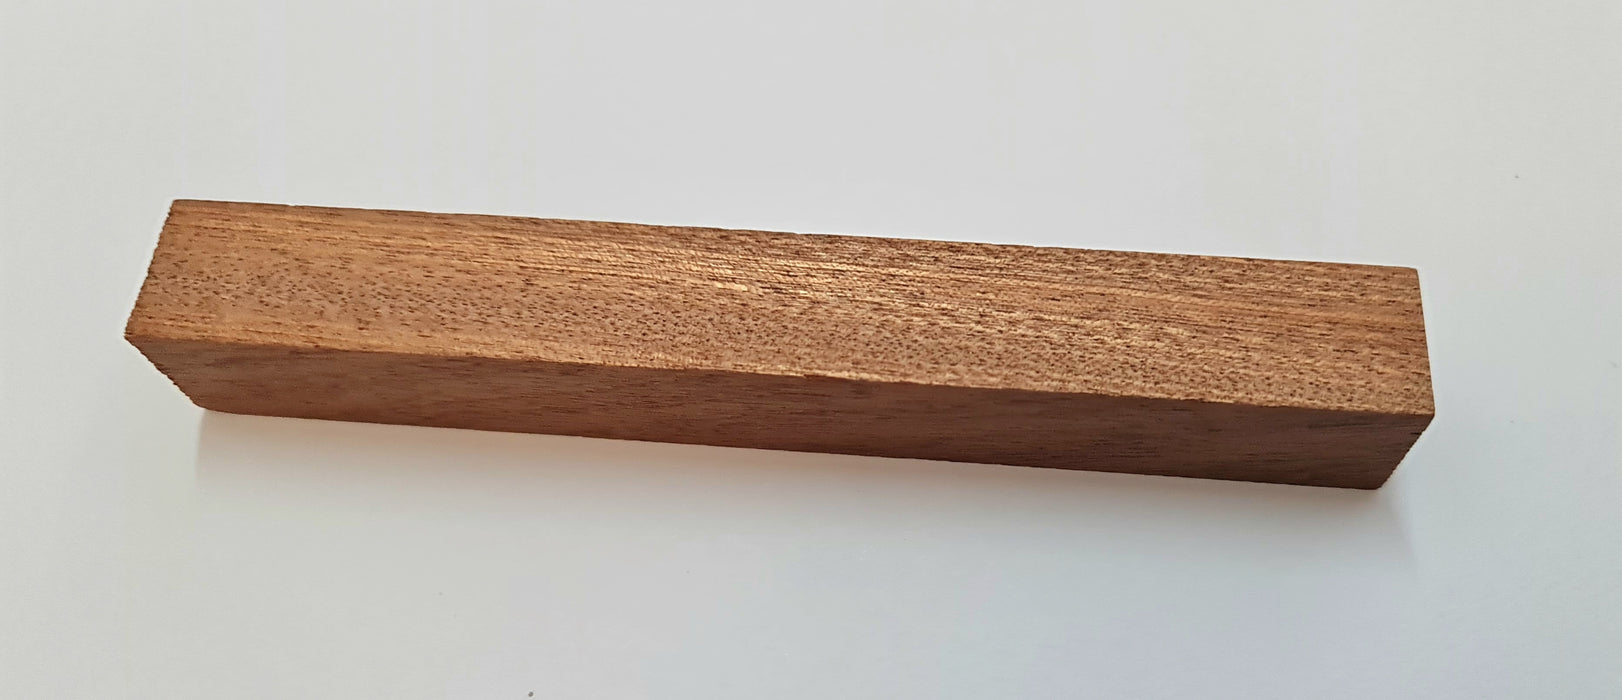 Toolcraft | Pen Turning Blank Sapele Wood